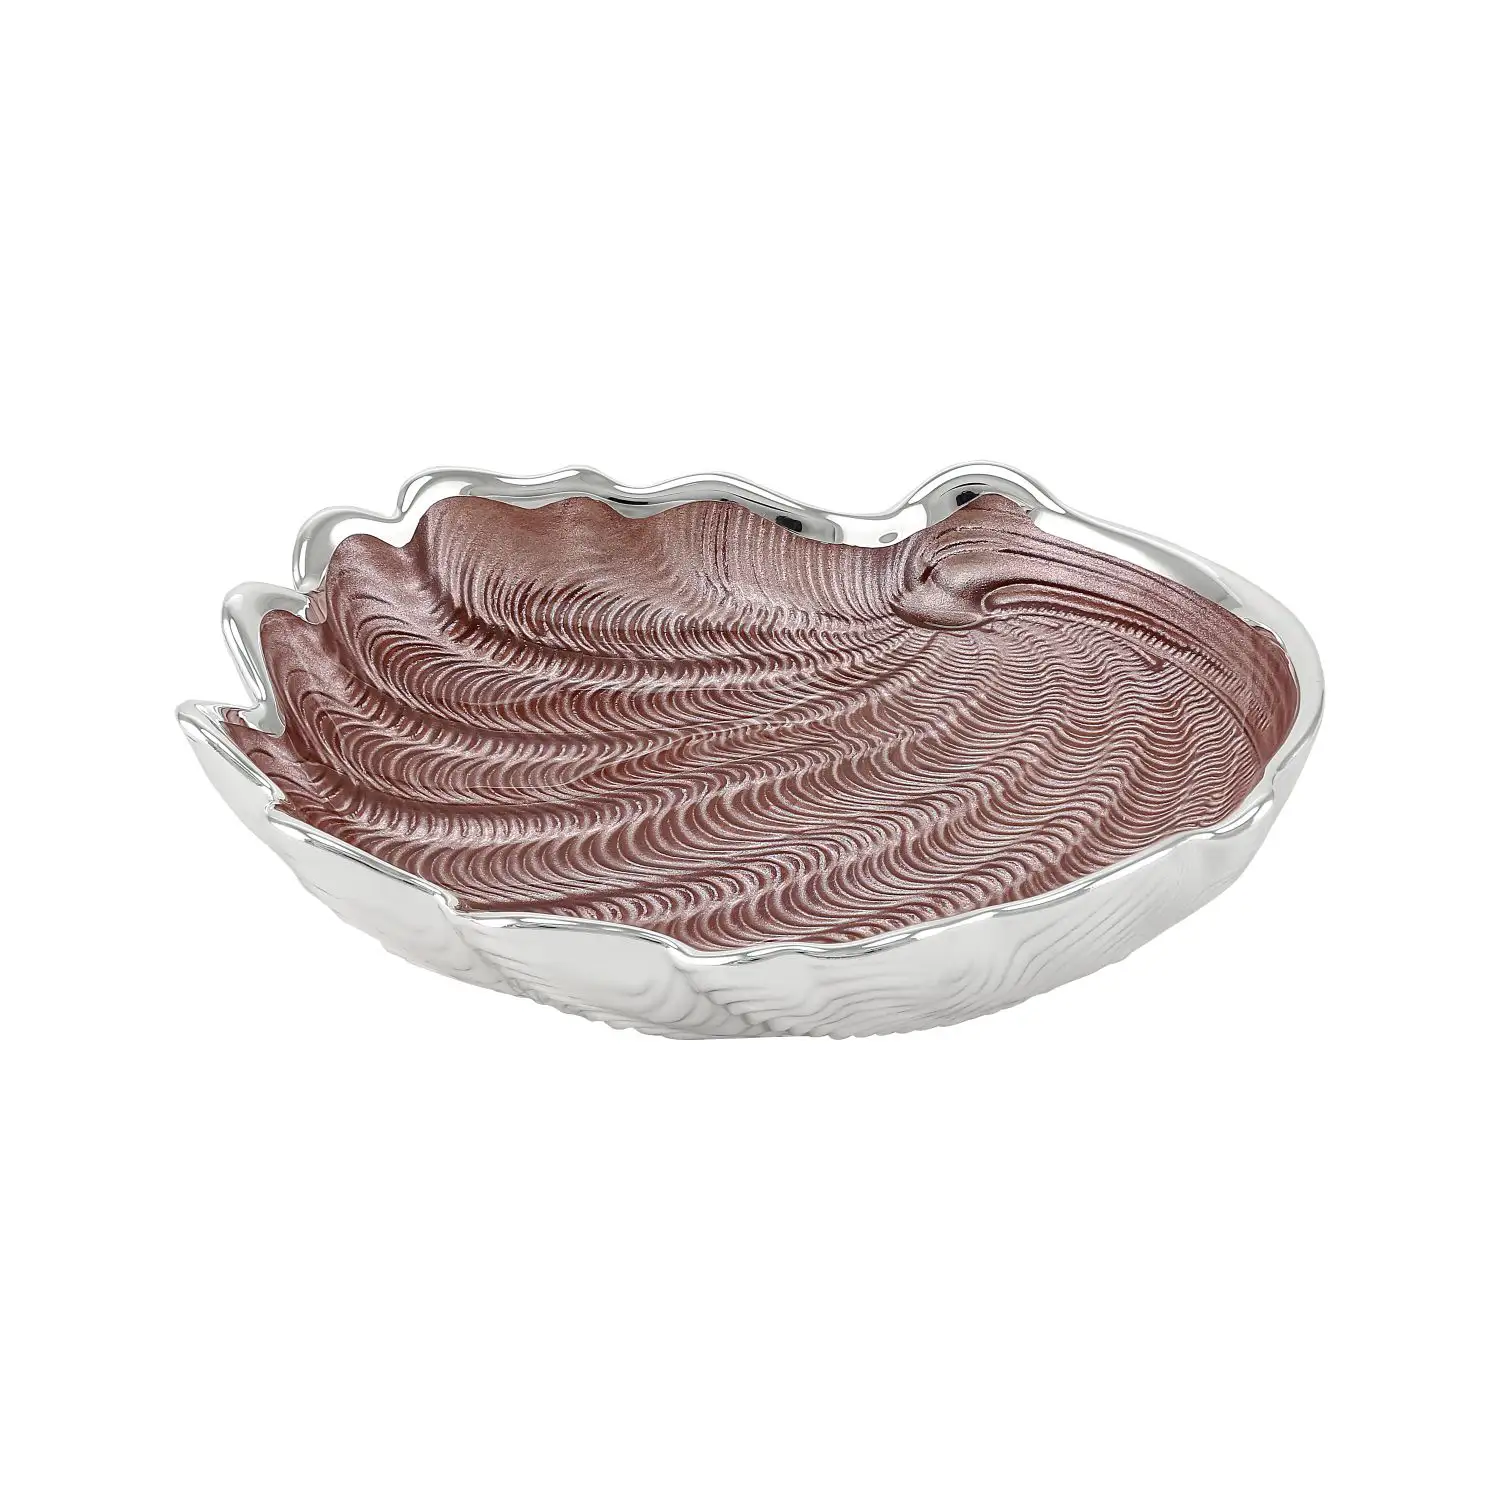 Тарелка стеклянная CONCHIGLIA (цвет бледно-розовый) диаметр 15 см тарелка стеклянная conchiglia цвет бледно розовый диаметр 15 см